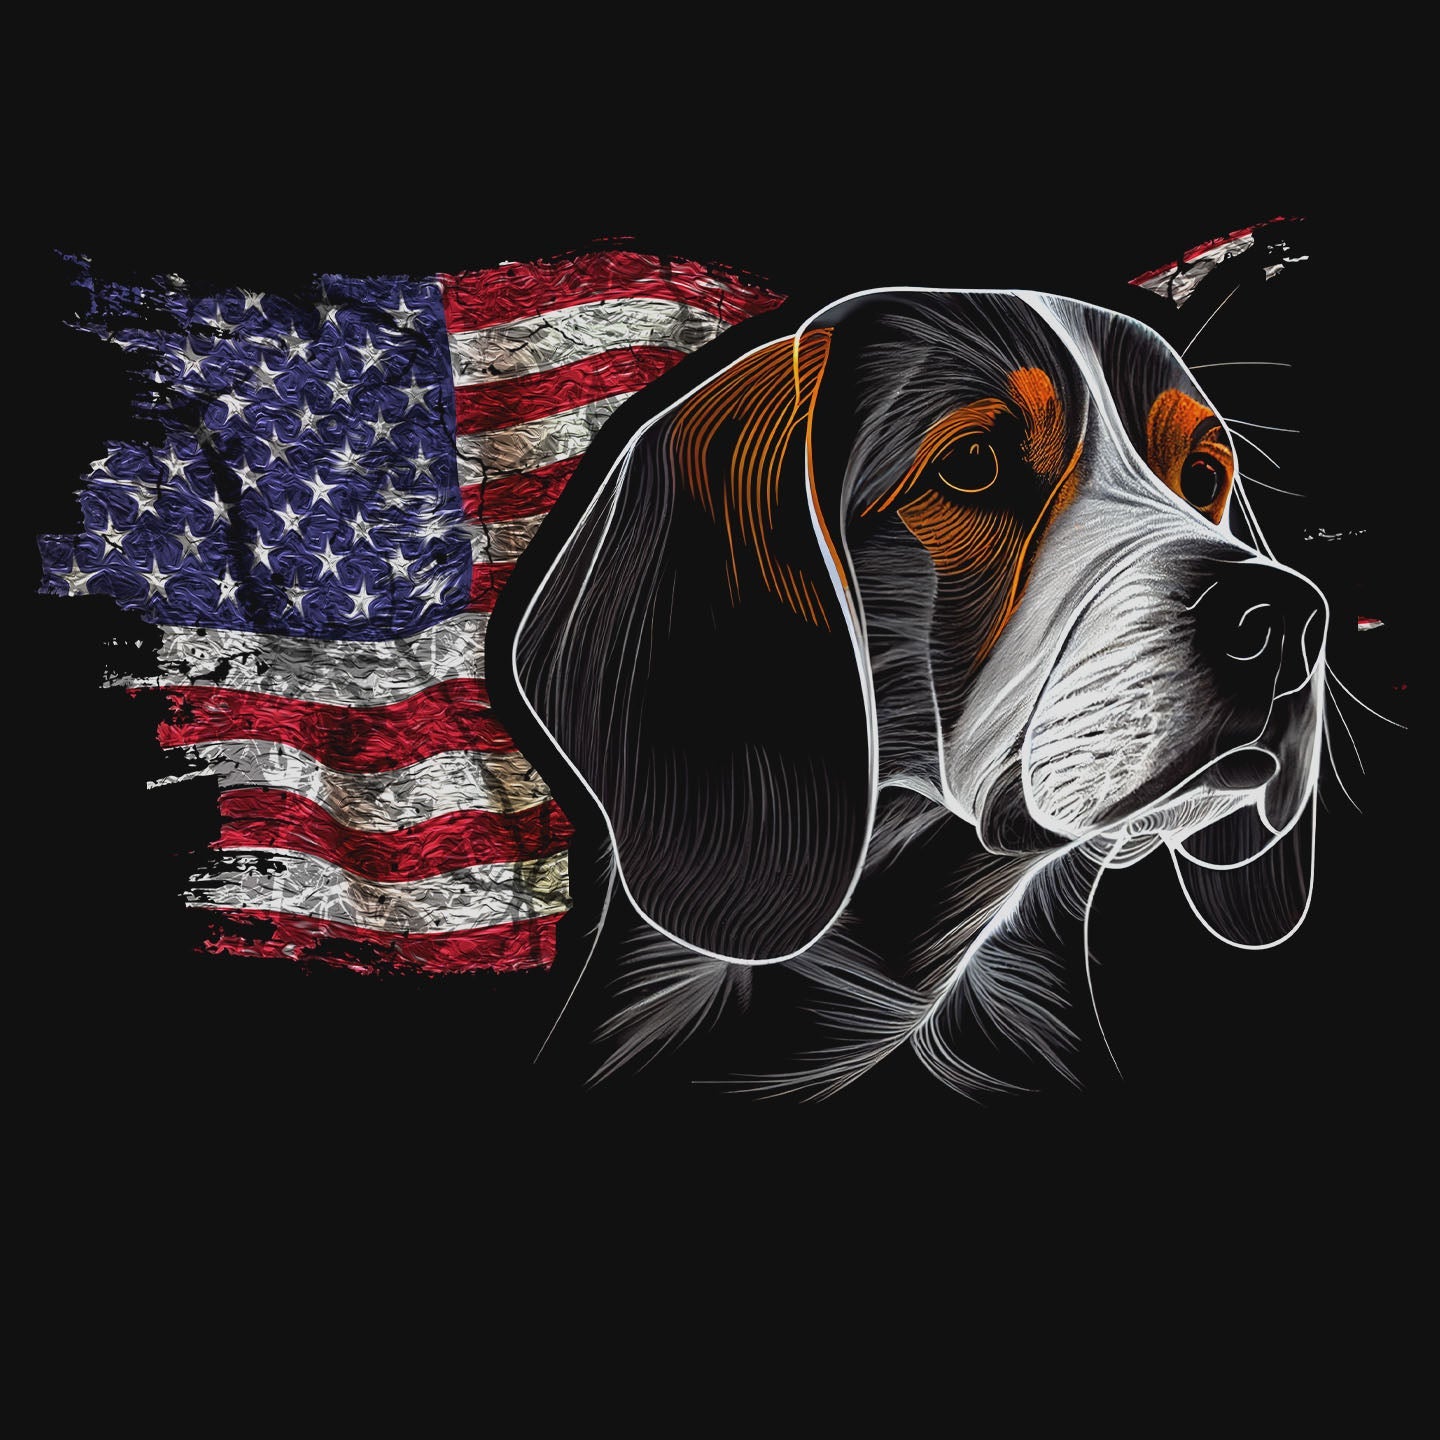 Patriotic Beagle American Flag - Women's V-Neck T-Shirt